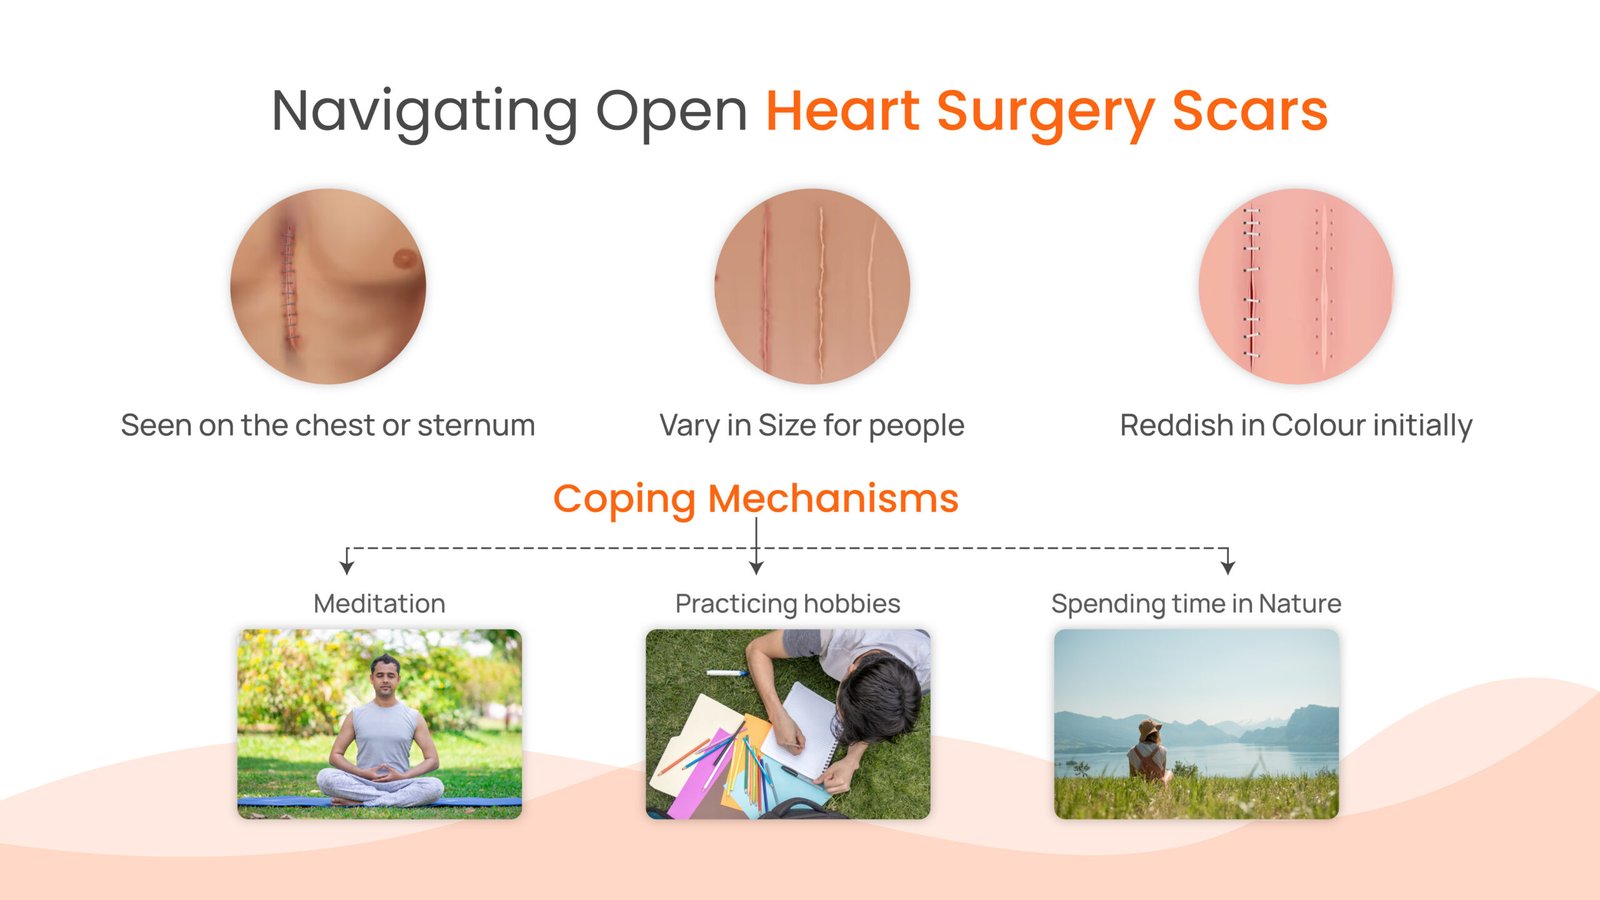 Open heart surgery scars